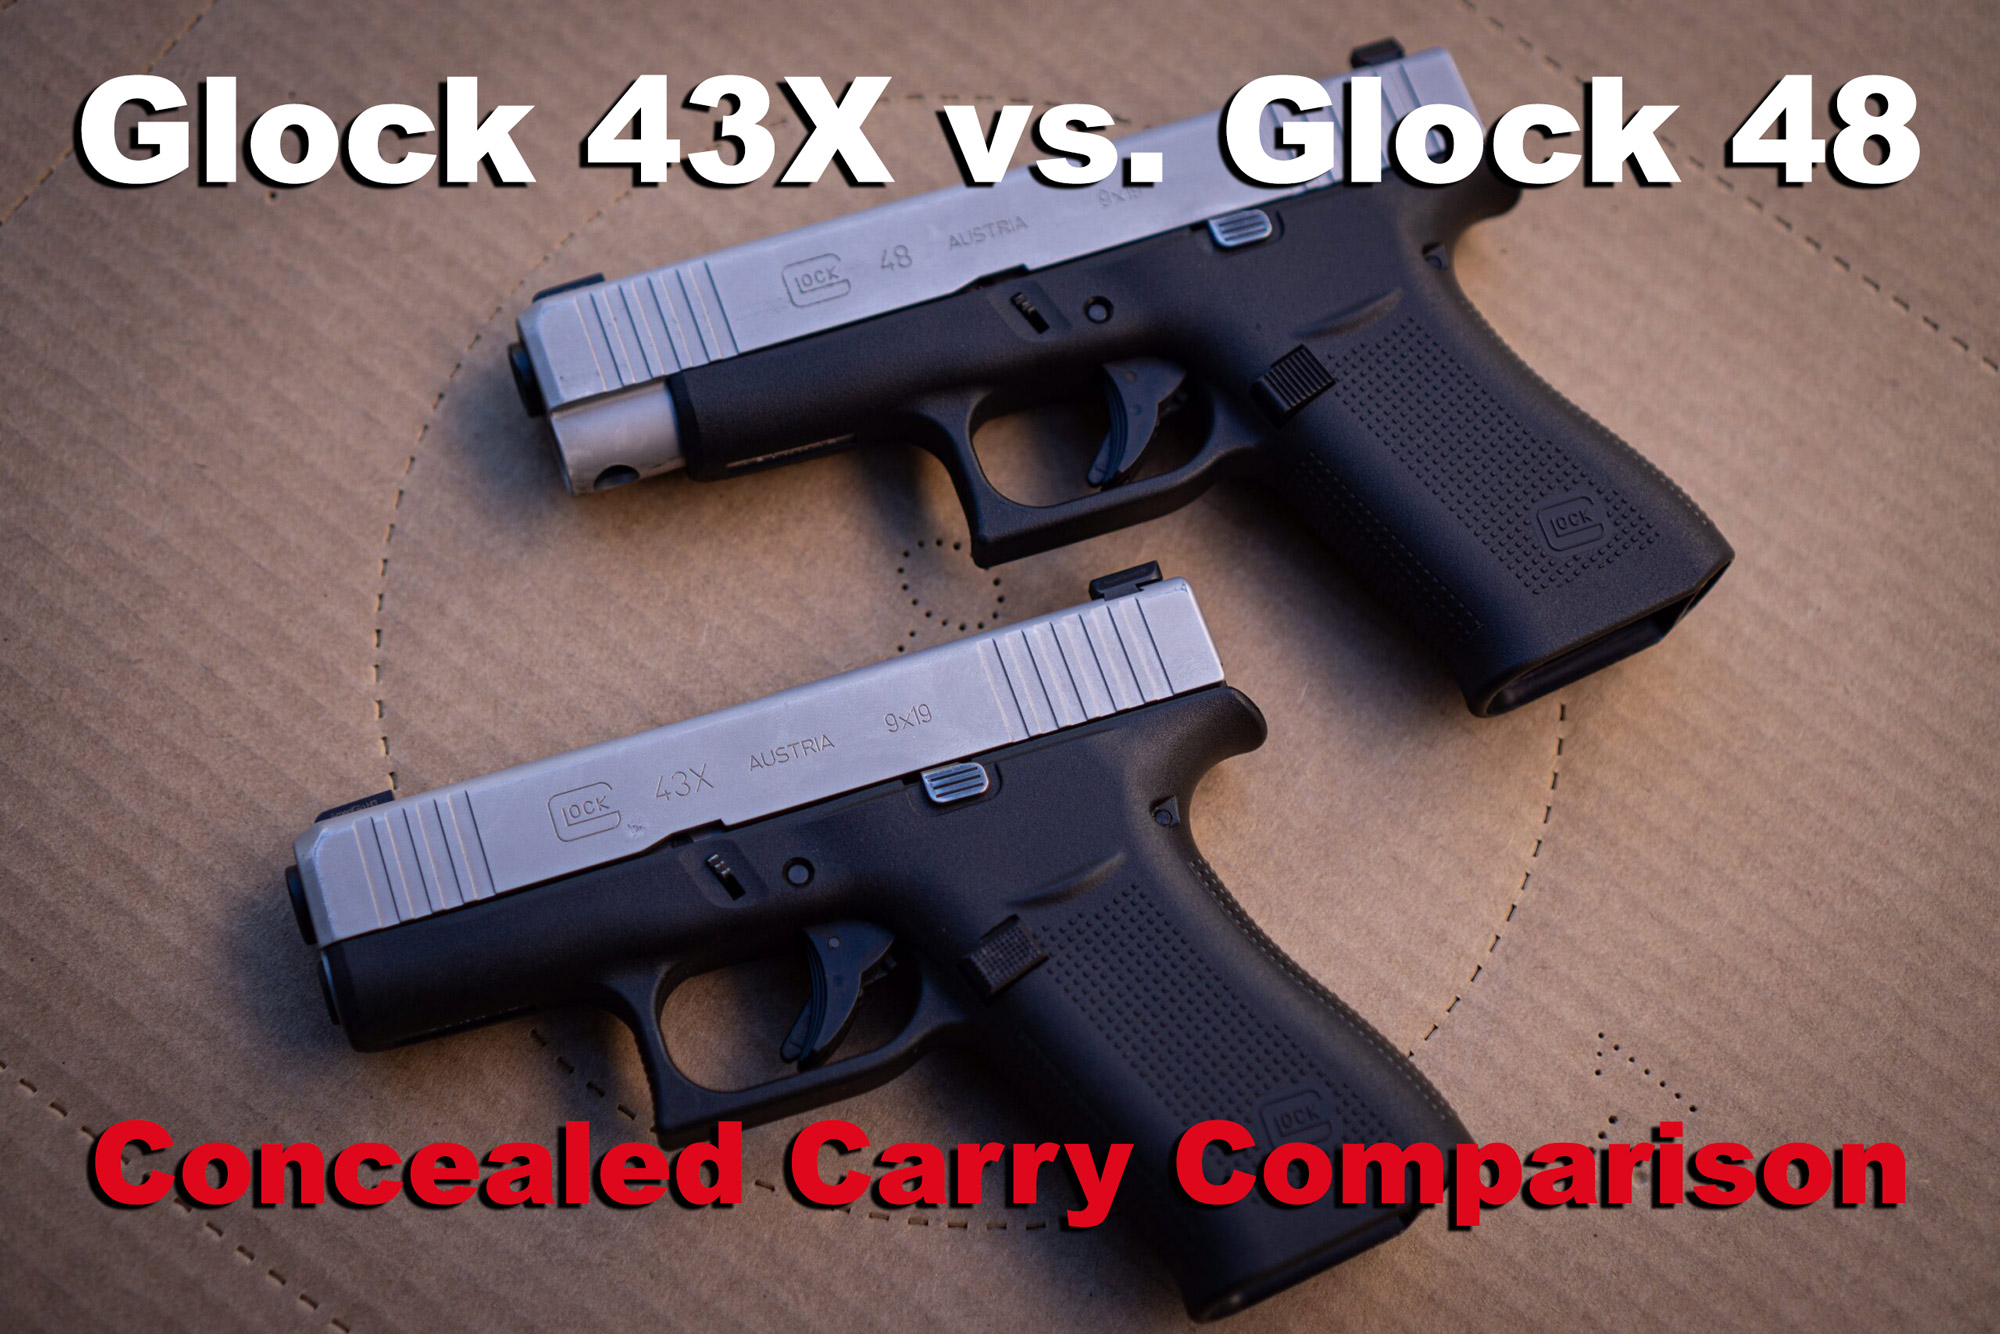 Glock 43x vs Glock 48 pistols on a shooting target